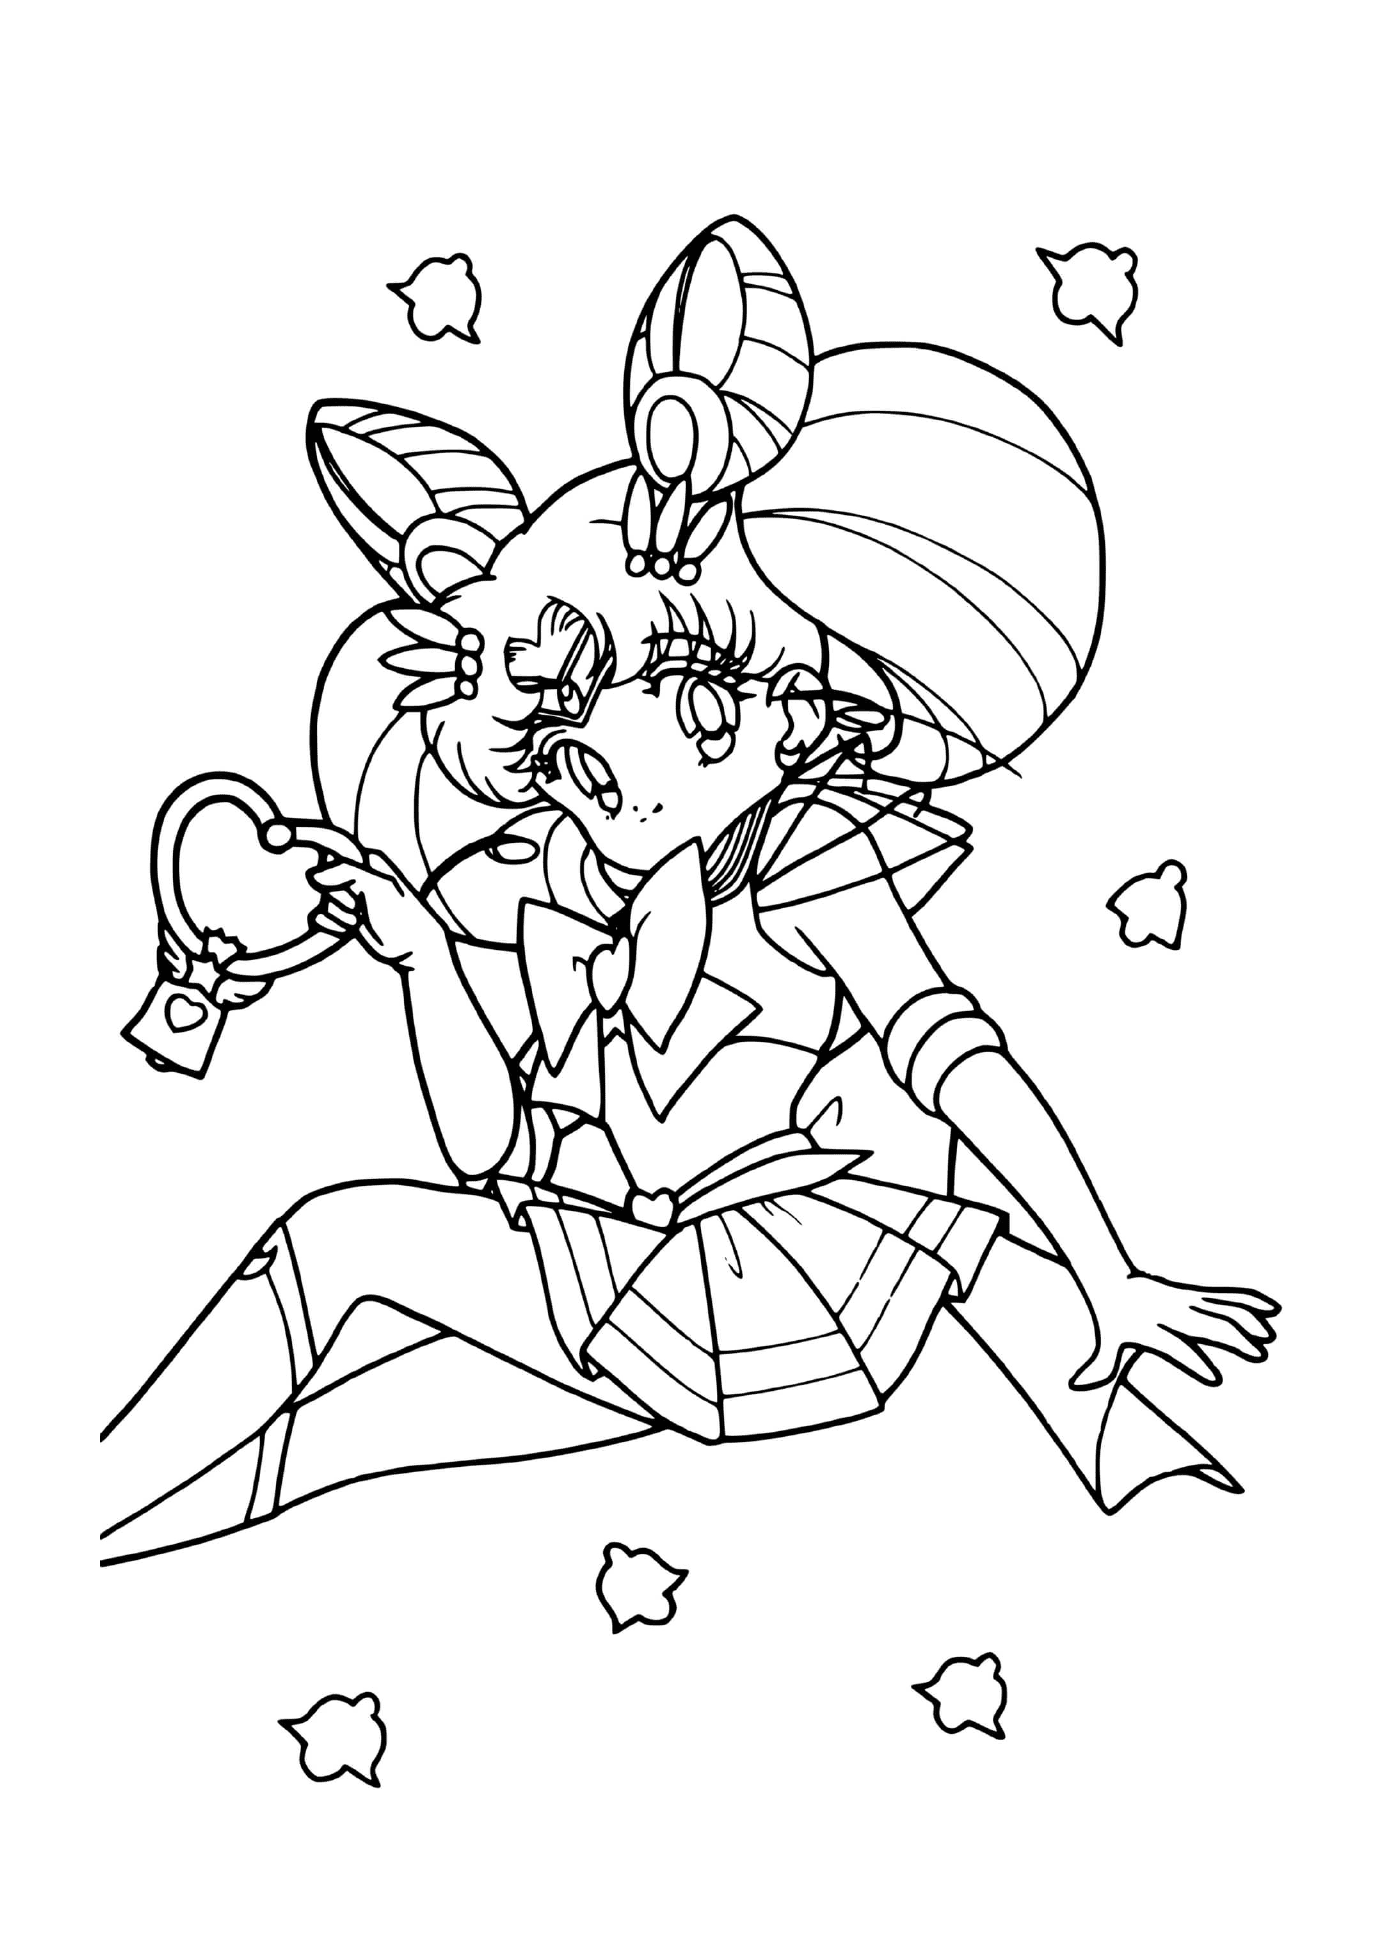  Cute character of Sailor Moon 